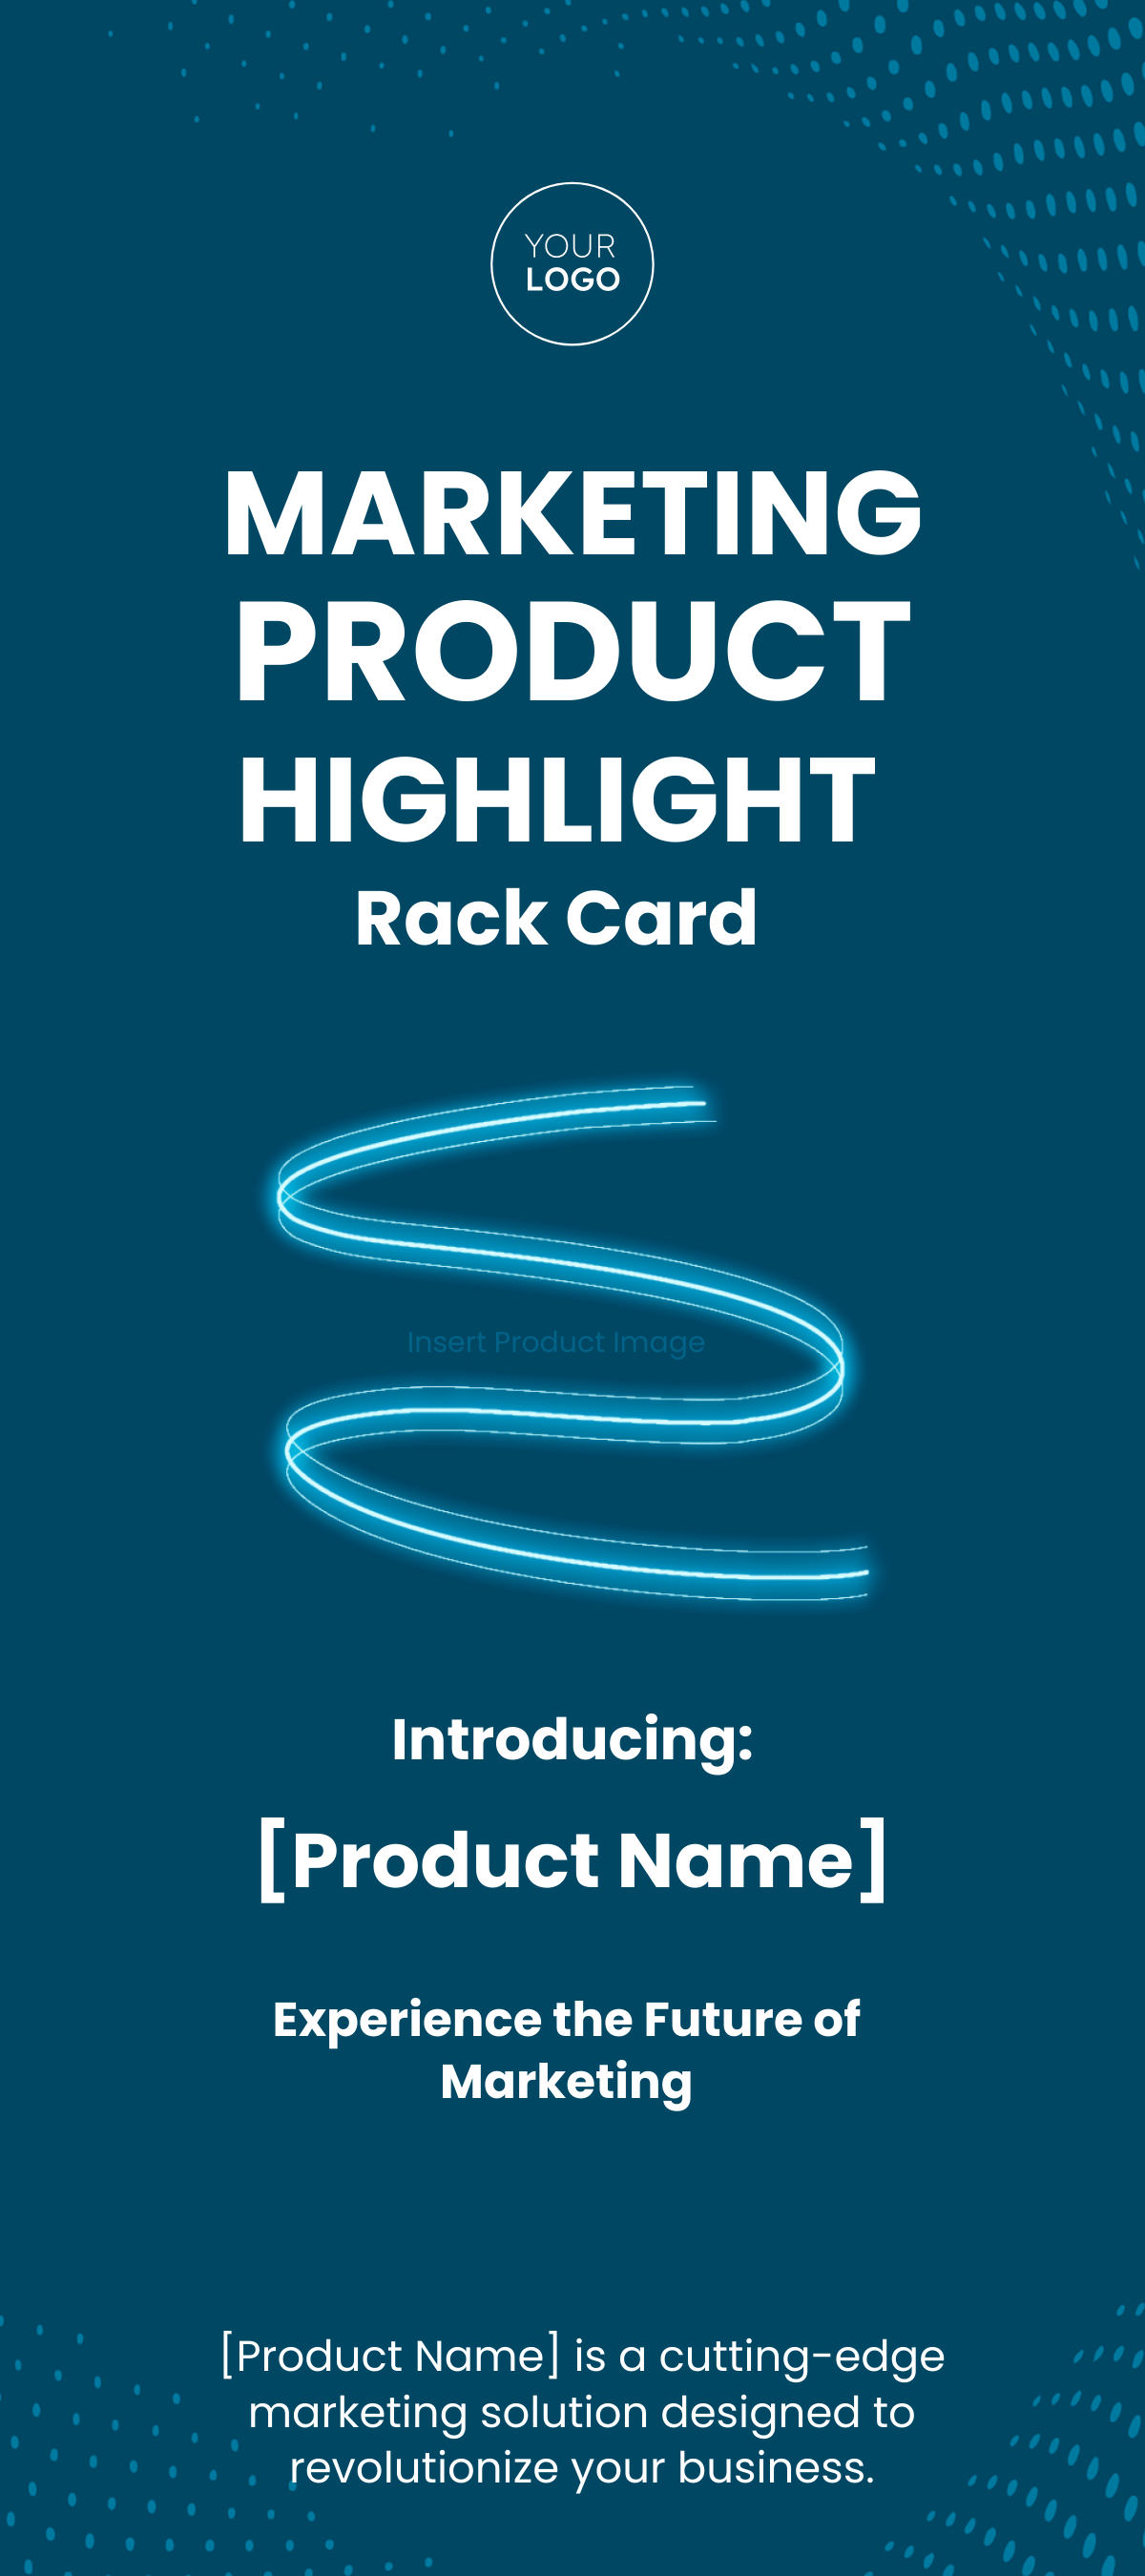 Marketing Product Highlight Rack Card